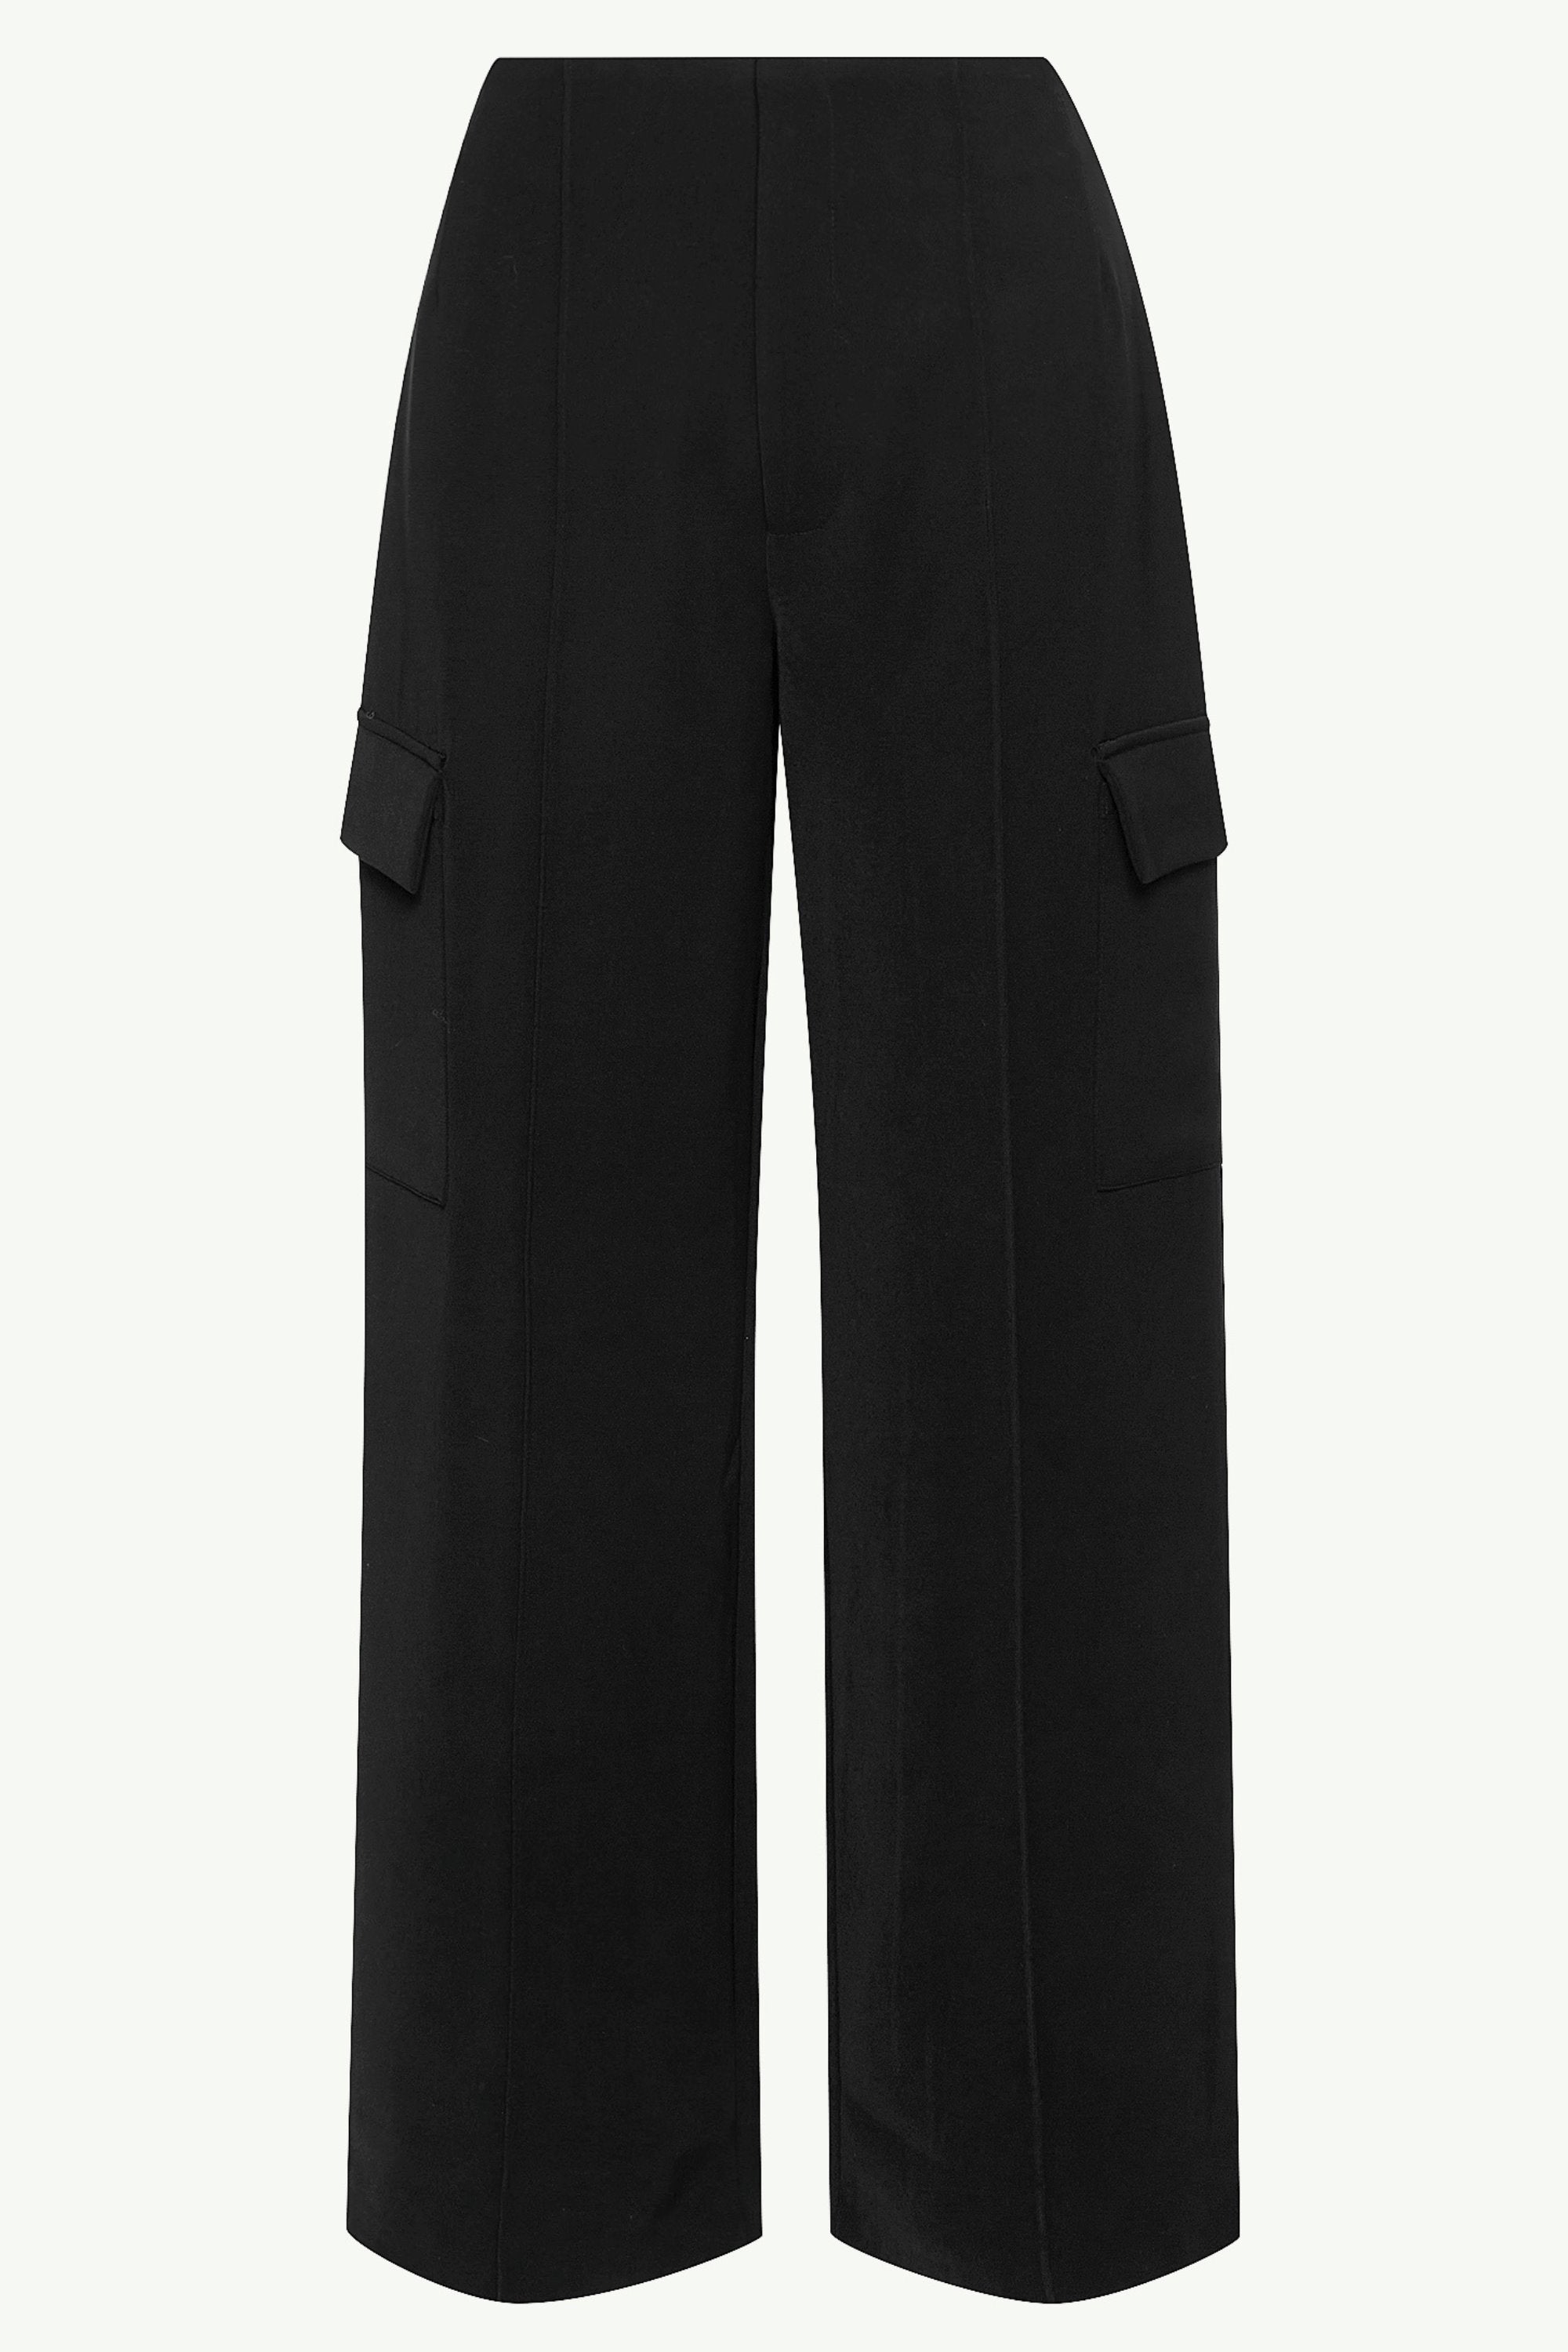 Rumer Wide Leg Cargo Pants - Black Clothing Veiled 